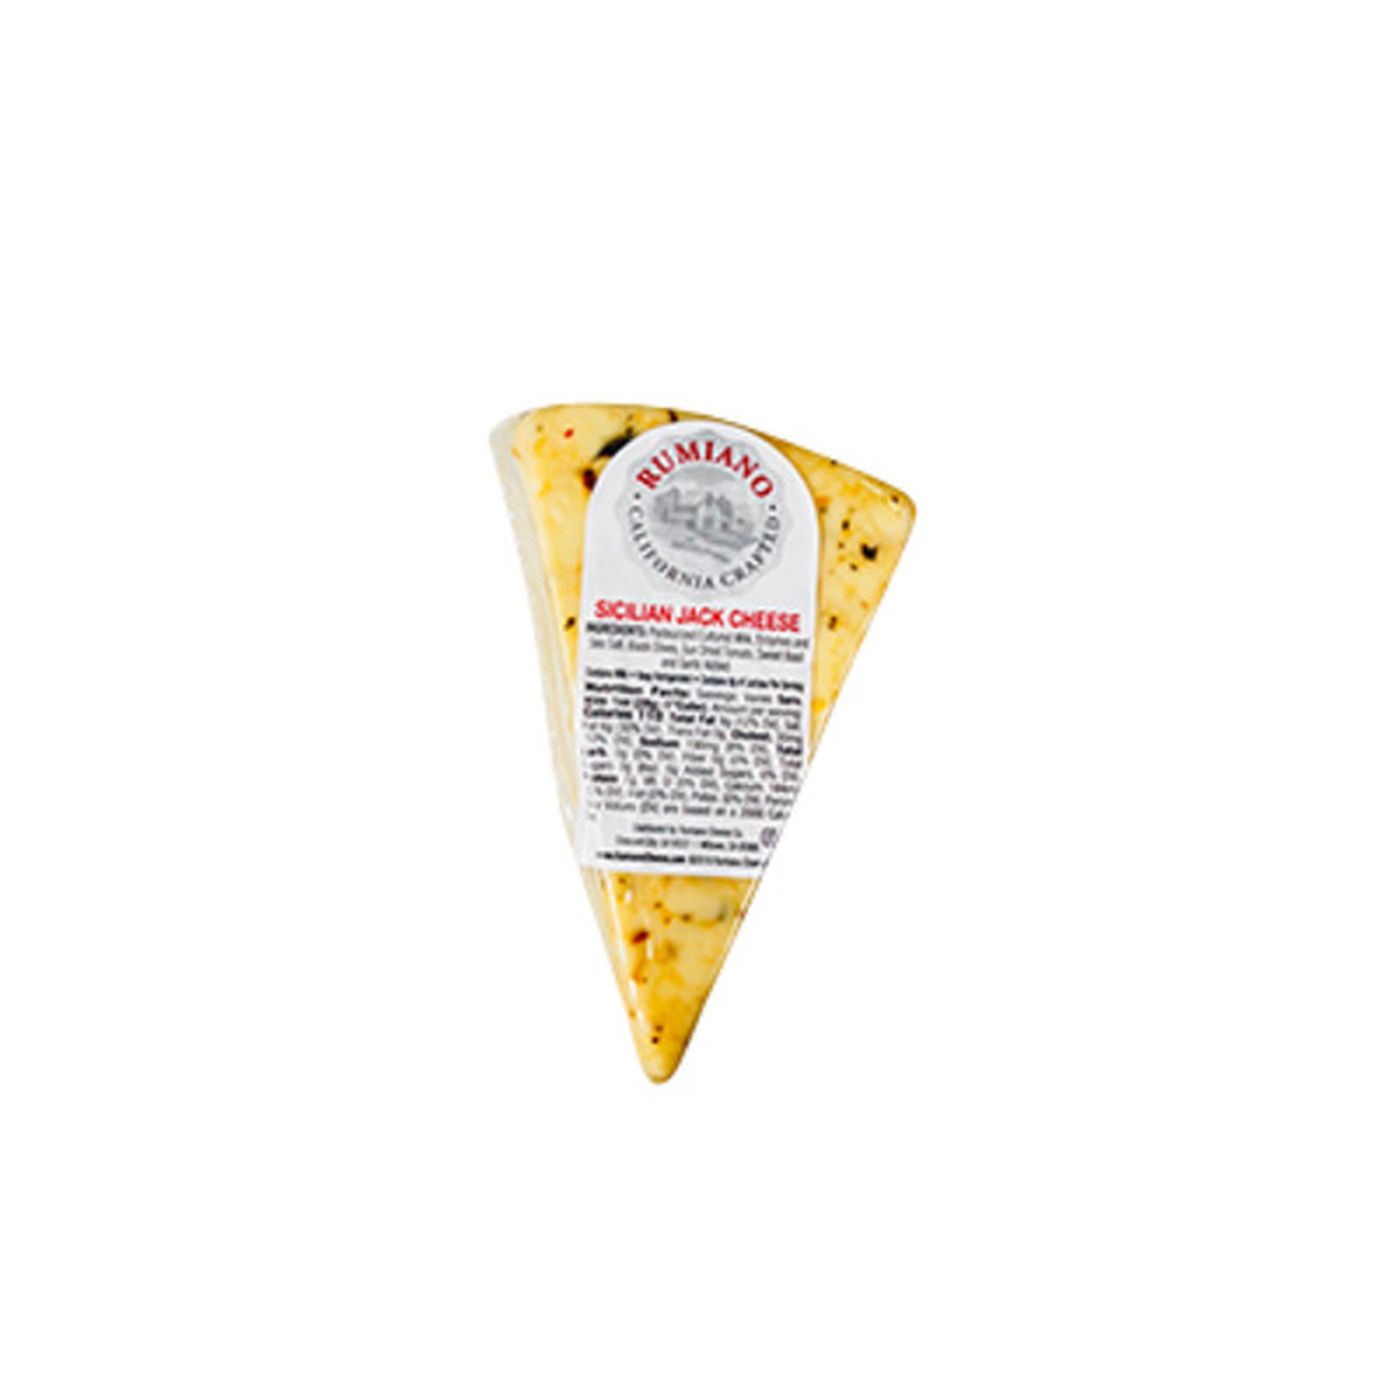 Rumiano Sicilian Jack Classic Cheese (per lb) Delivery or Pickup Near